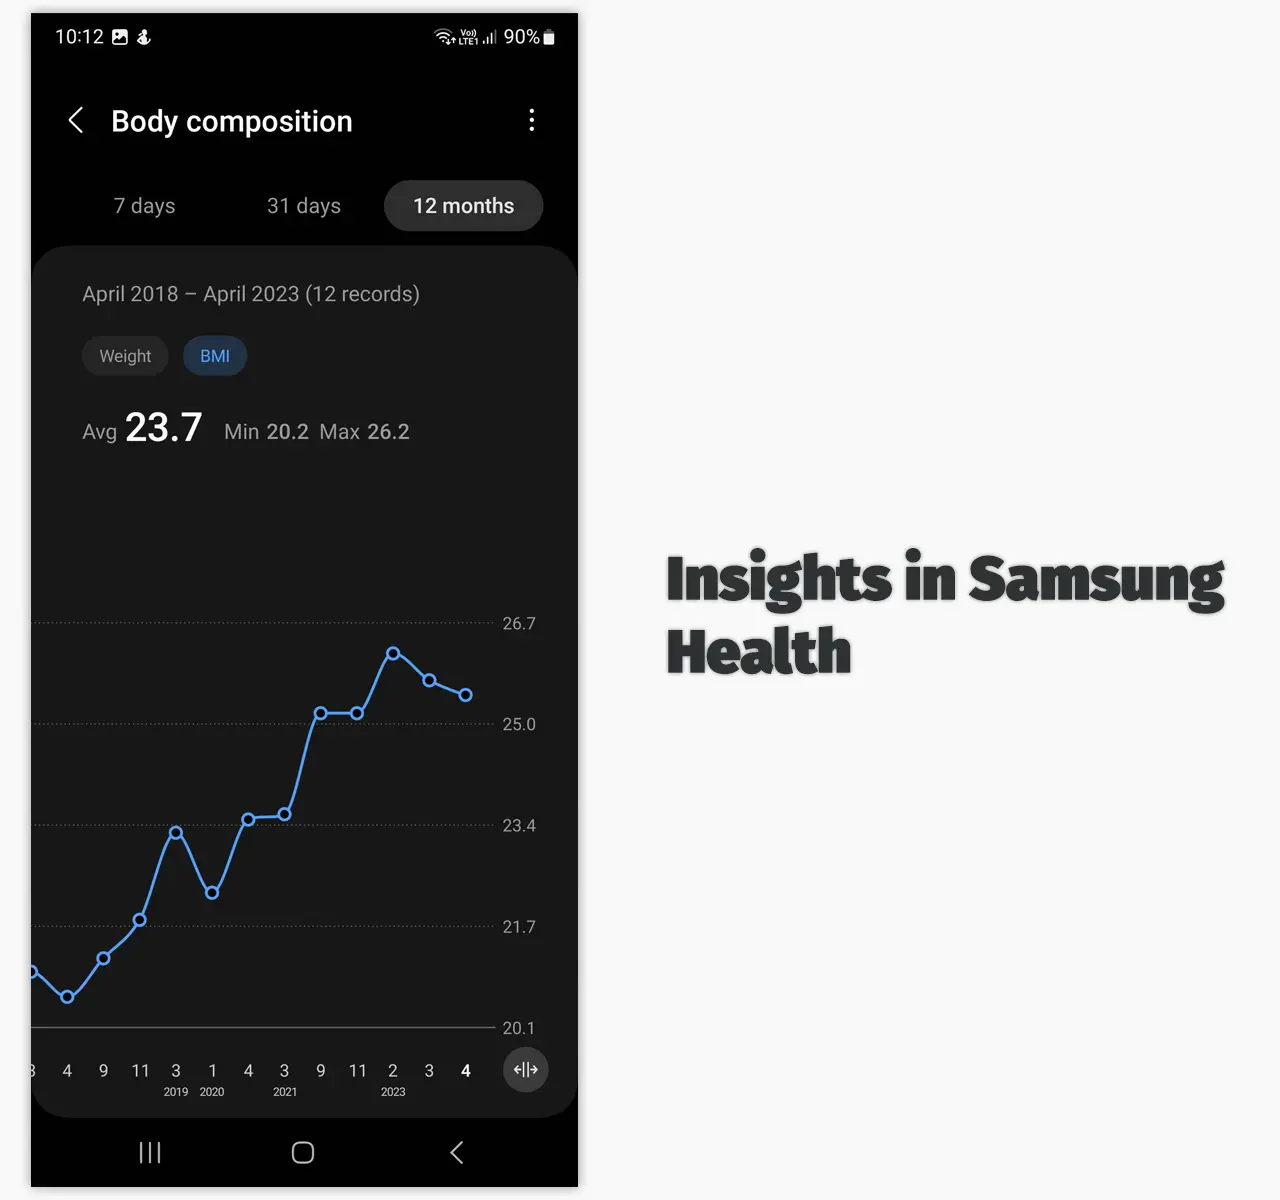 Insights in Samsung Health